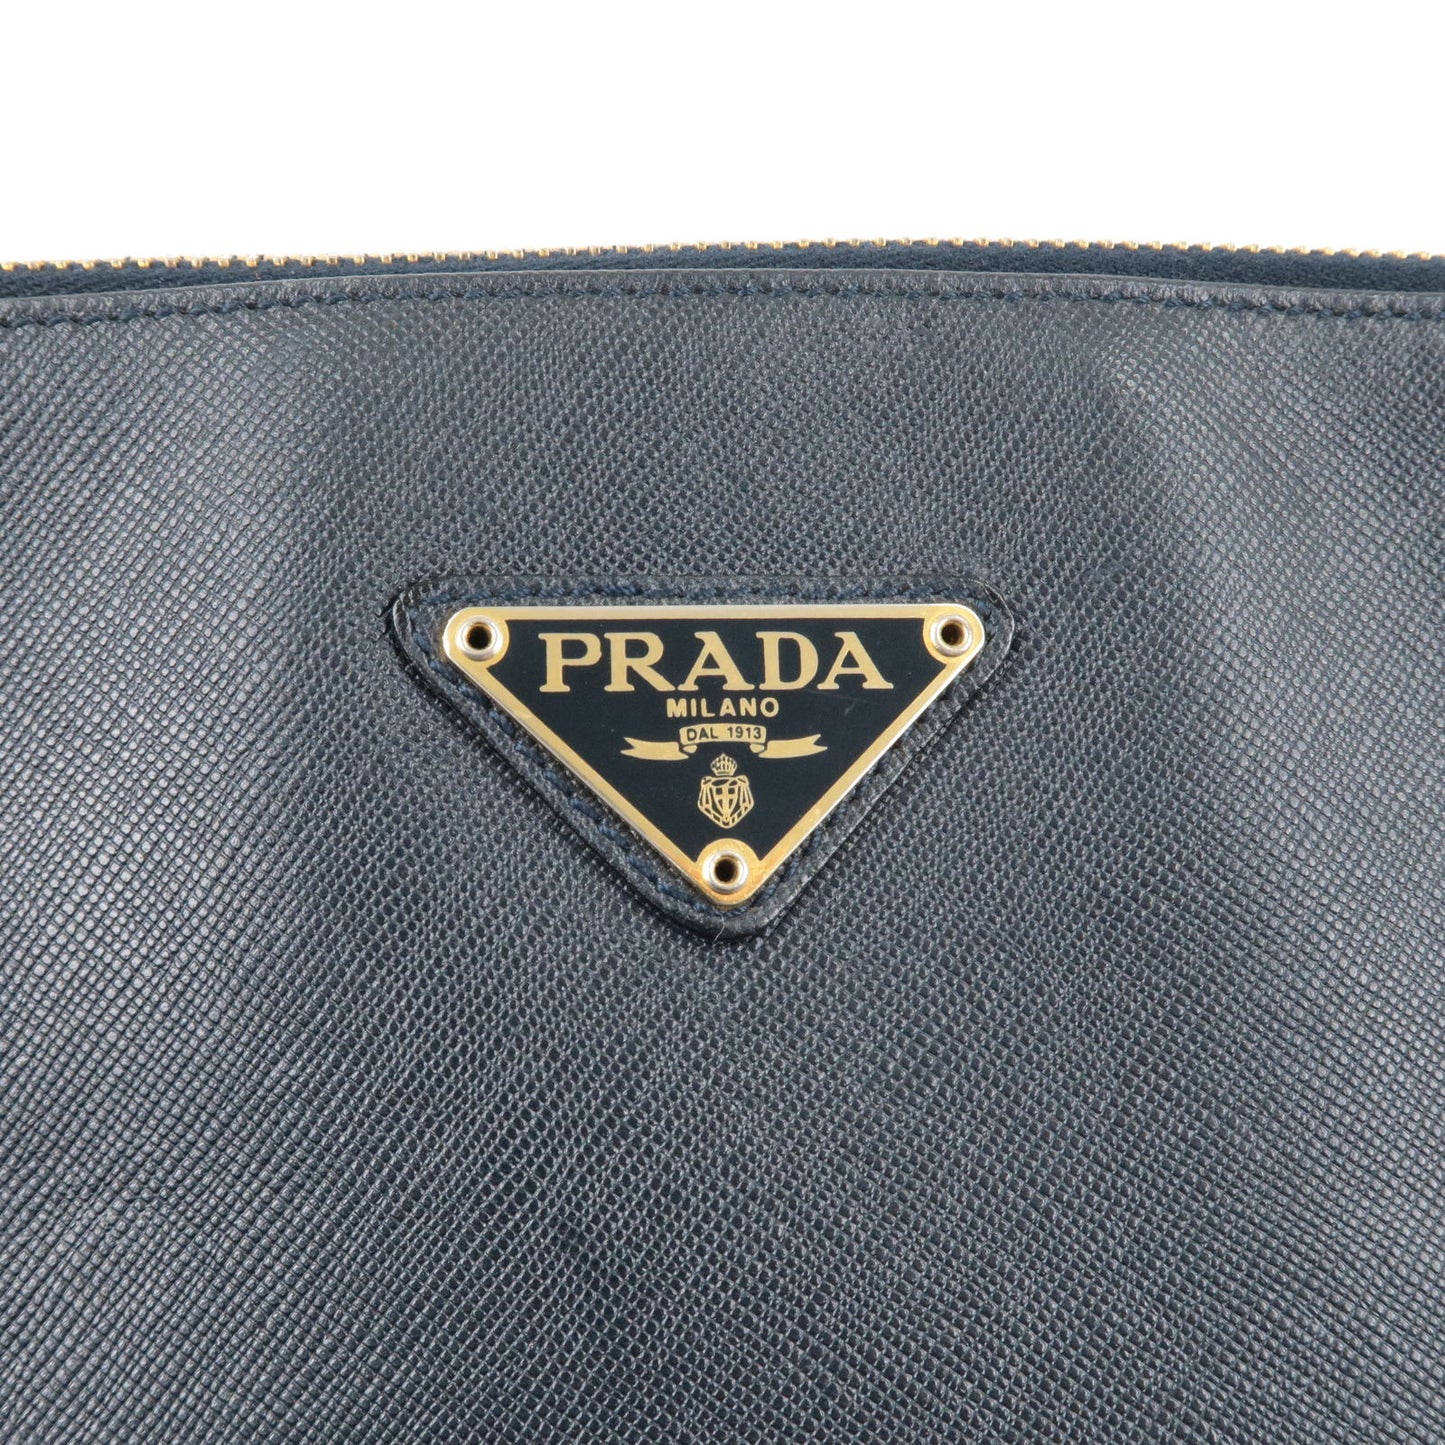 PRADA Logo Leather Clutch Bag Pouch Purse Navy